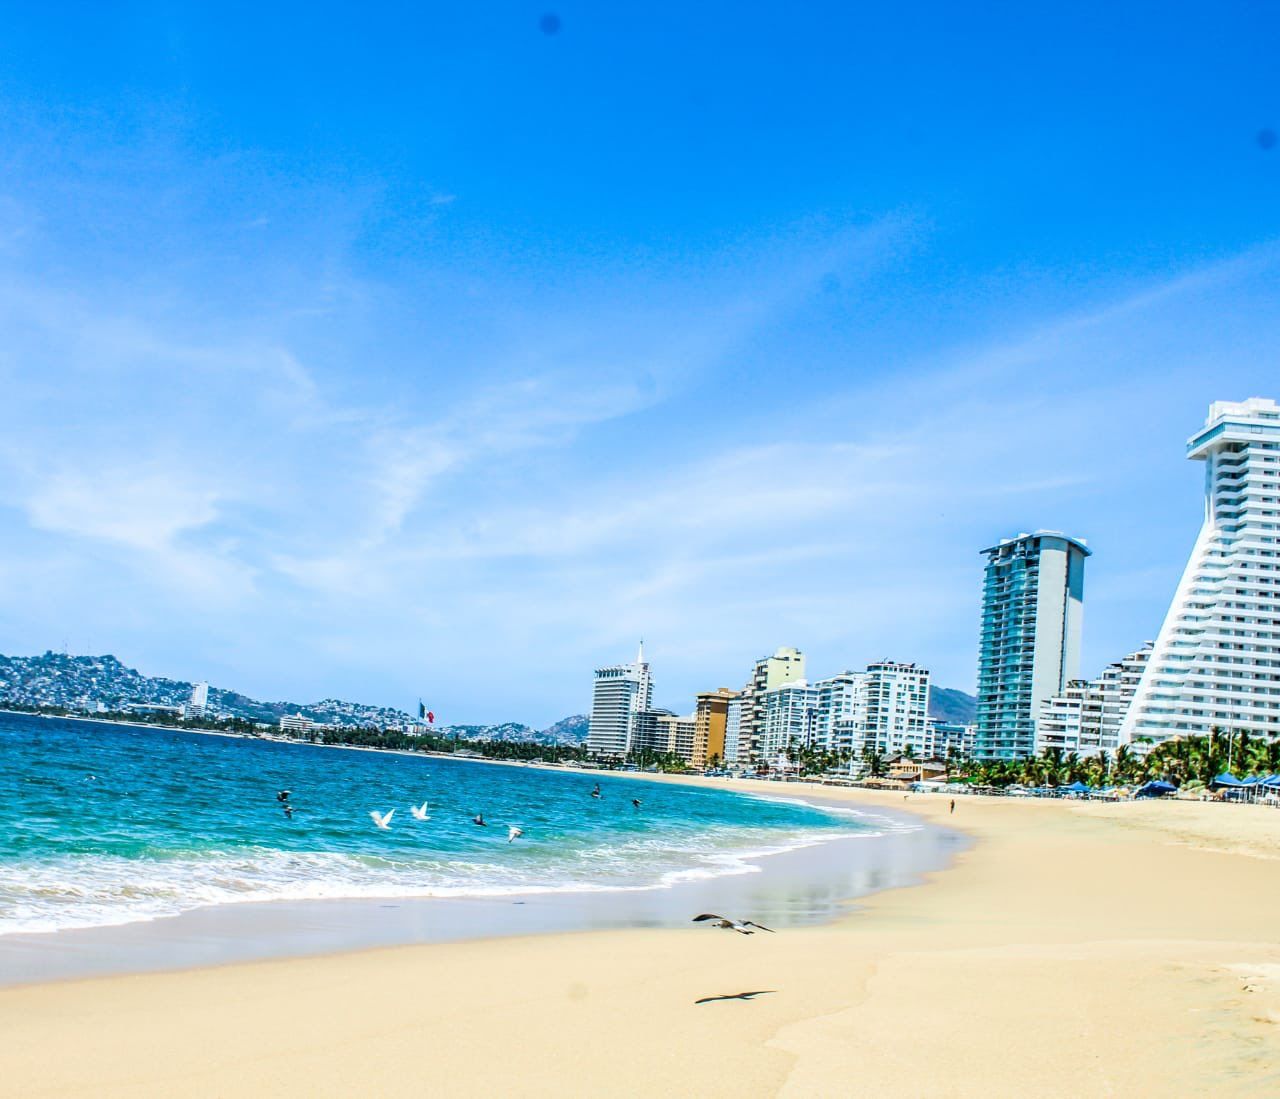 En dos meses va a repuntar turismo en Acapulco: AMLO 